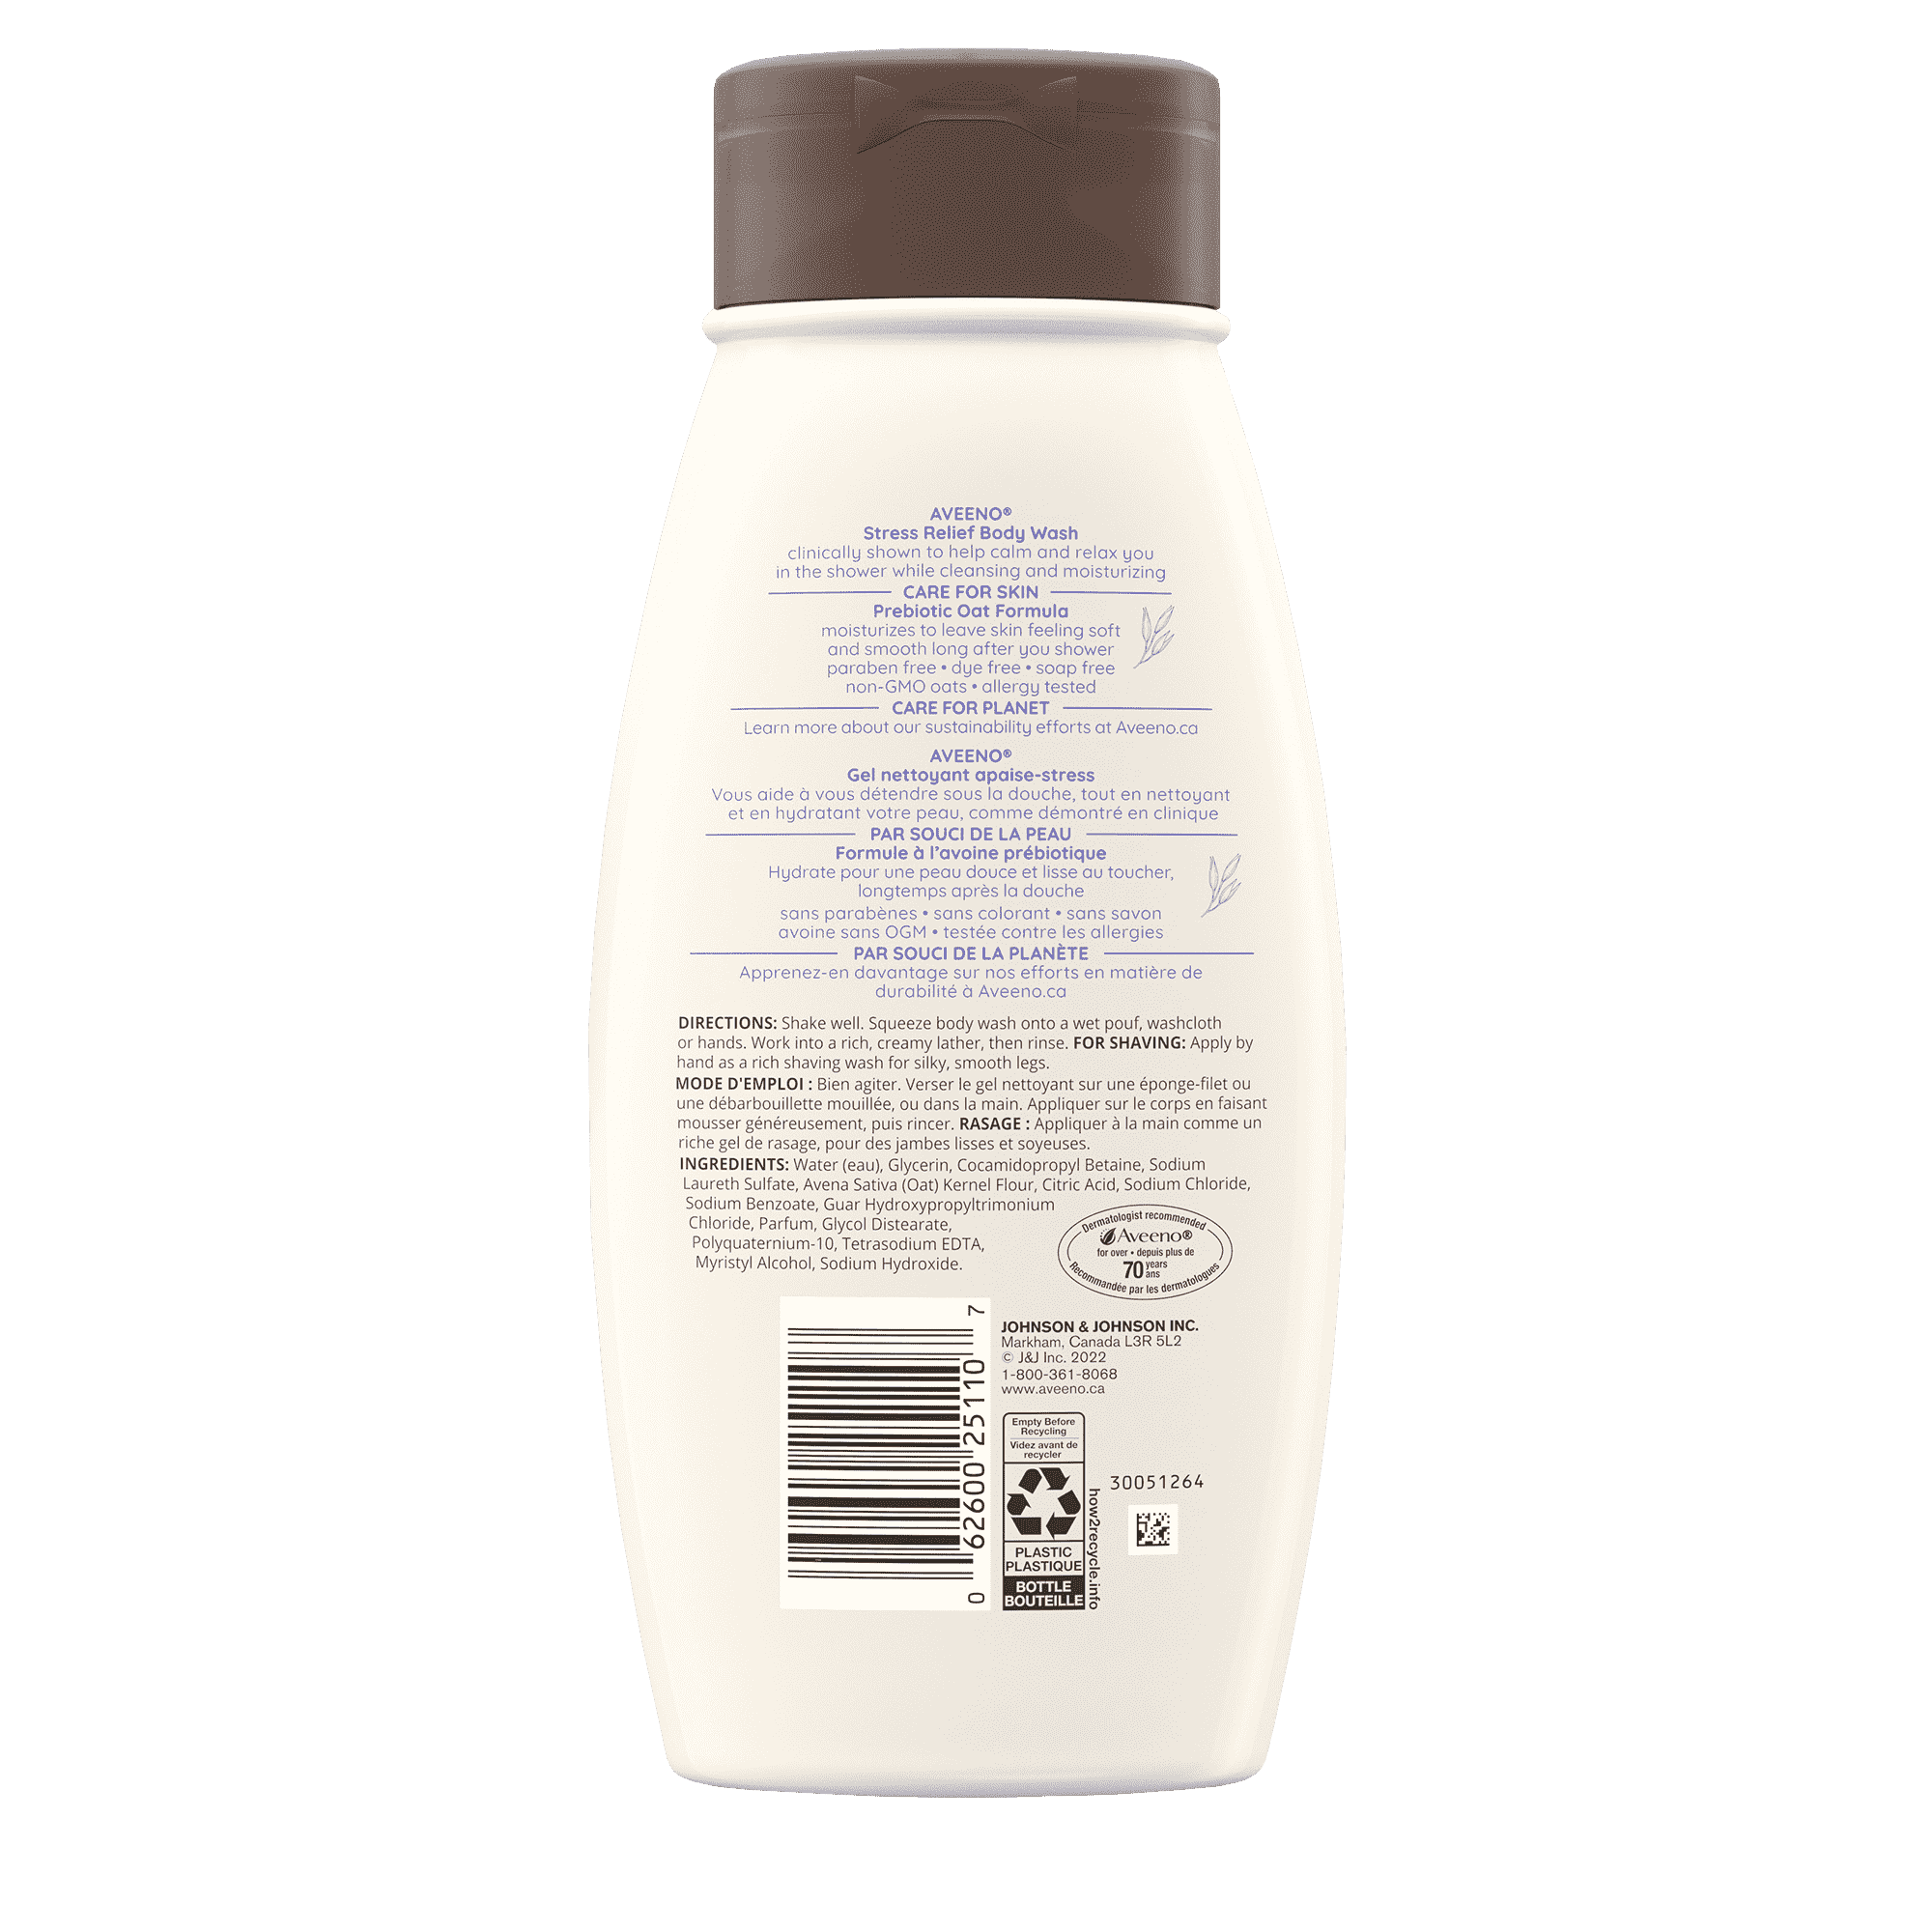 AVEENO® Stress Relief Body Wash, 532ml bottle, back label